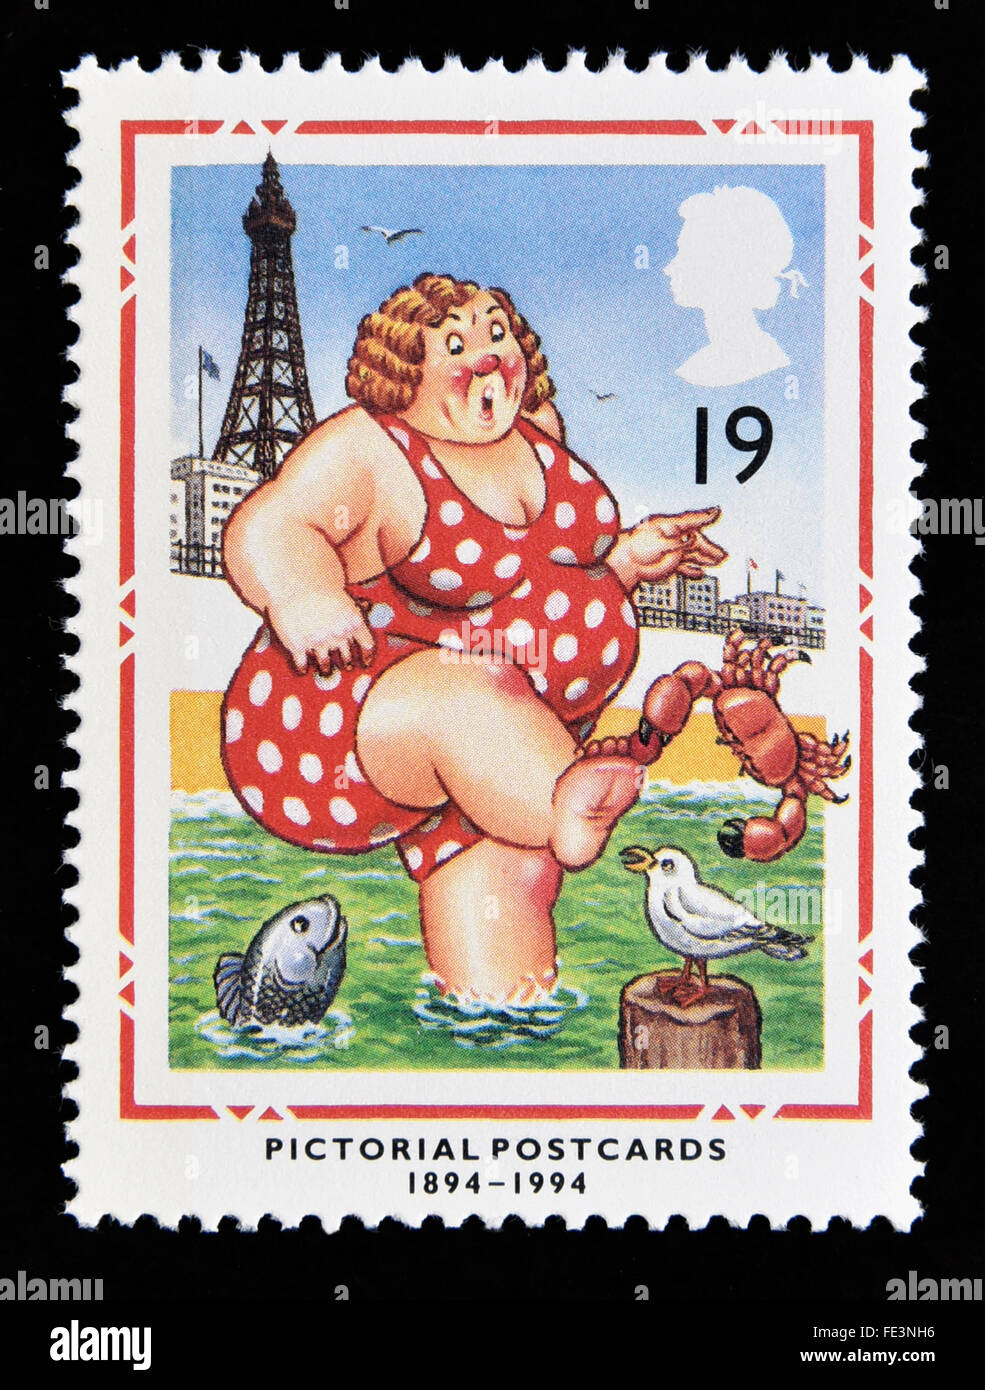 Postage stamp. Great Britain. Queen Elizabeth II. 1994. Centenary of Pictorial Postcards. 1894-1994. 19p. Stock Photo